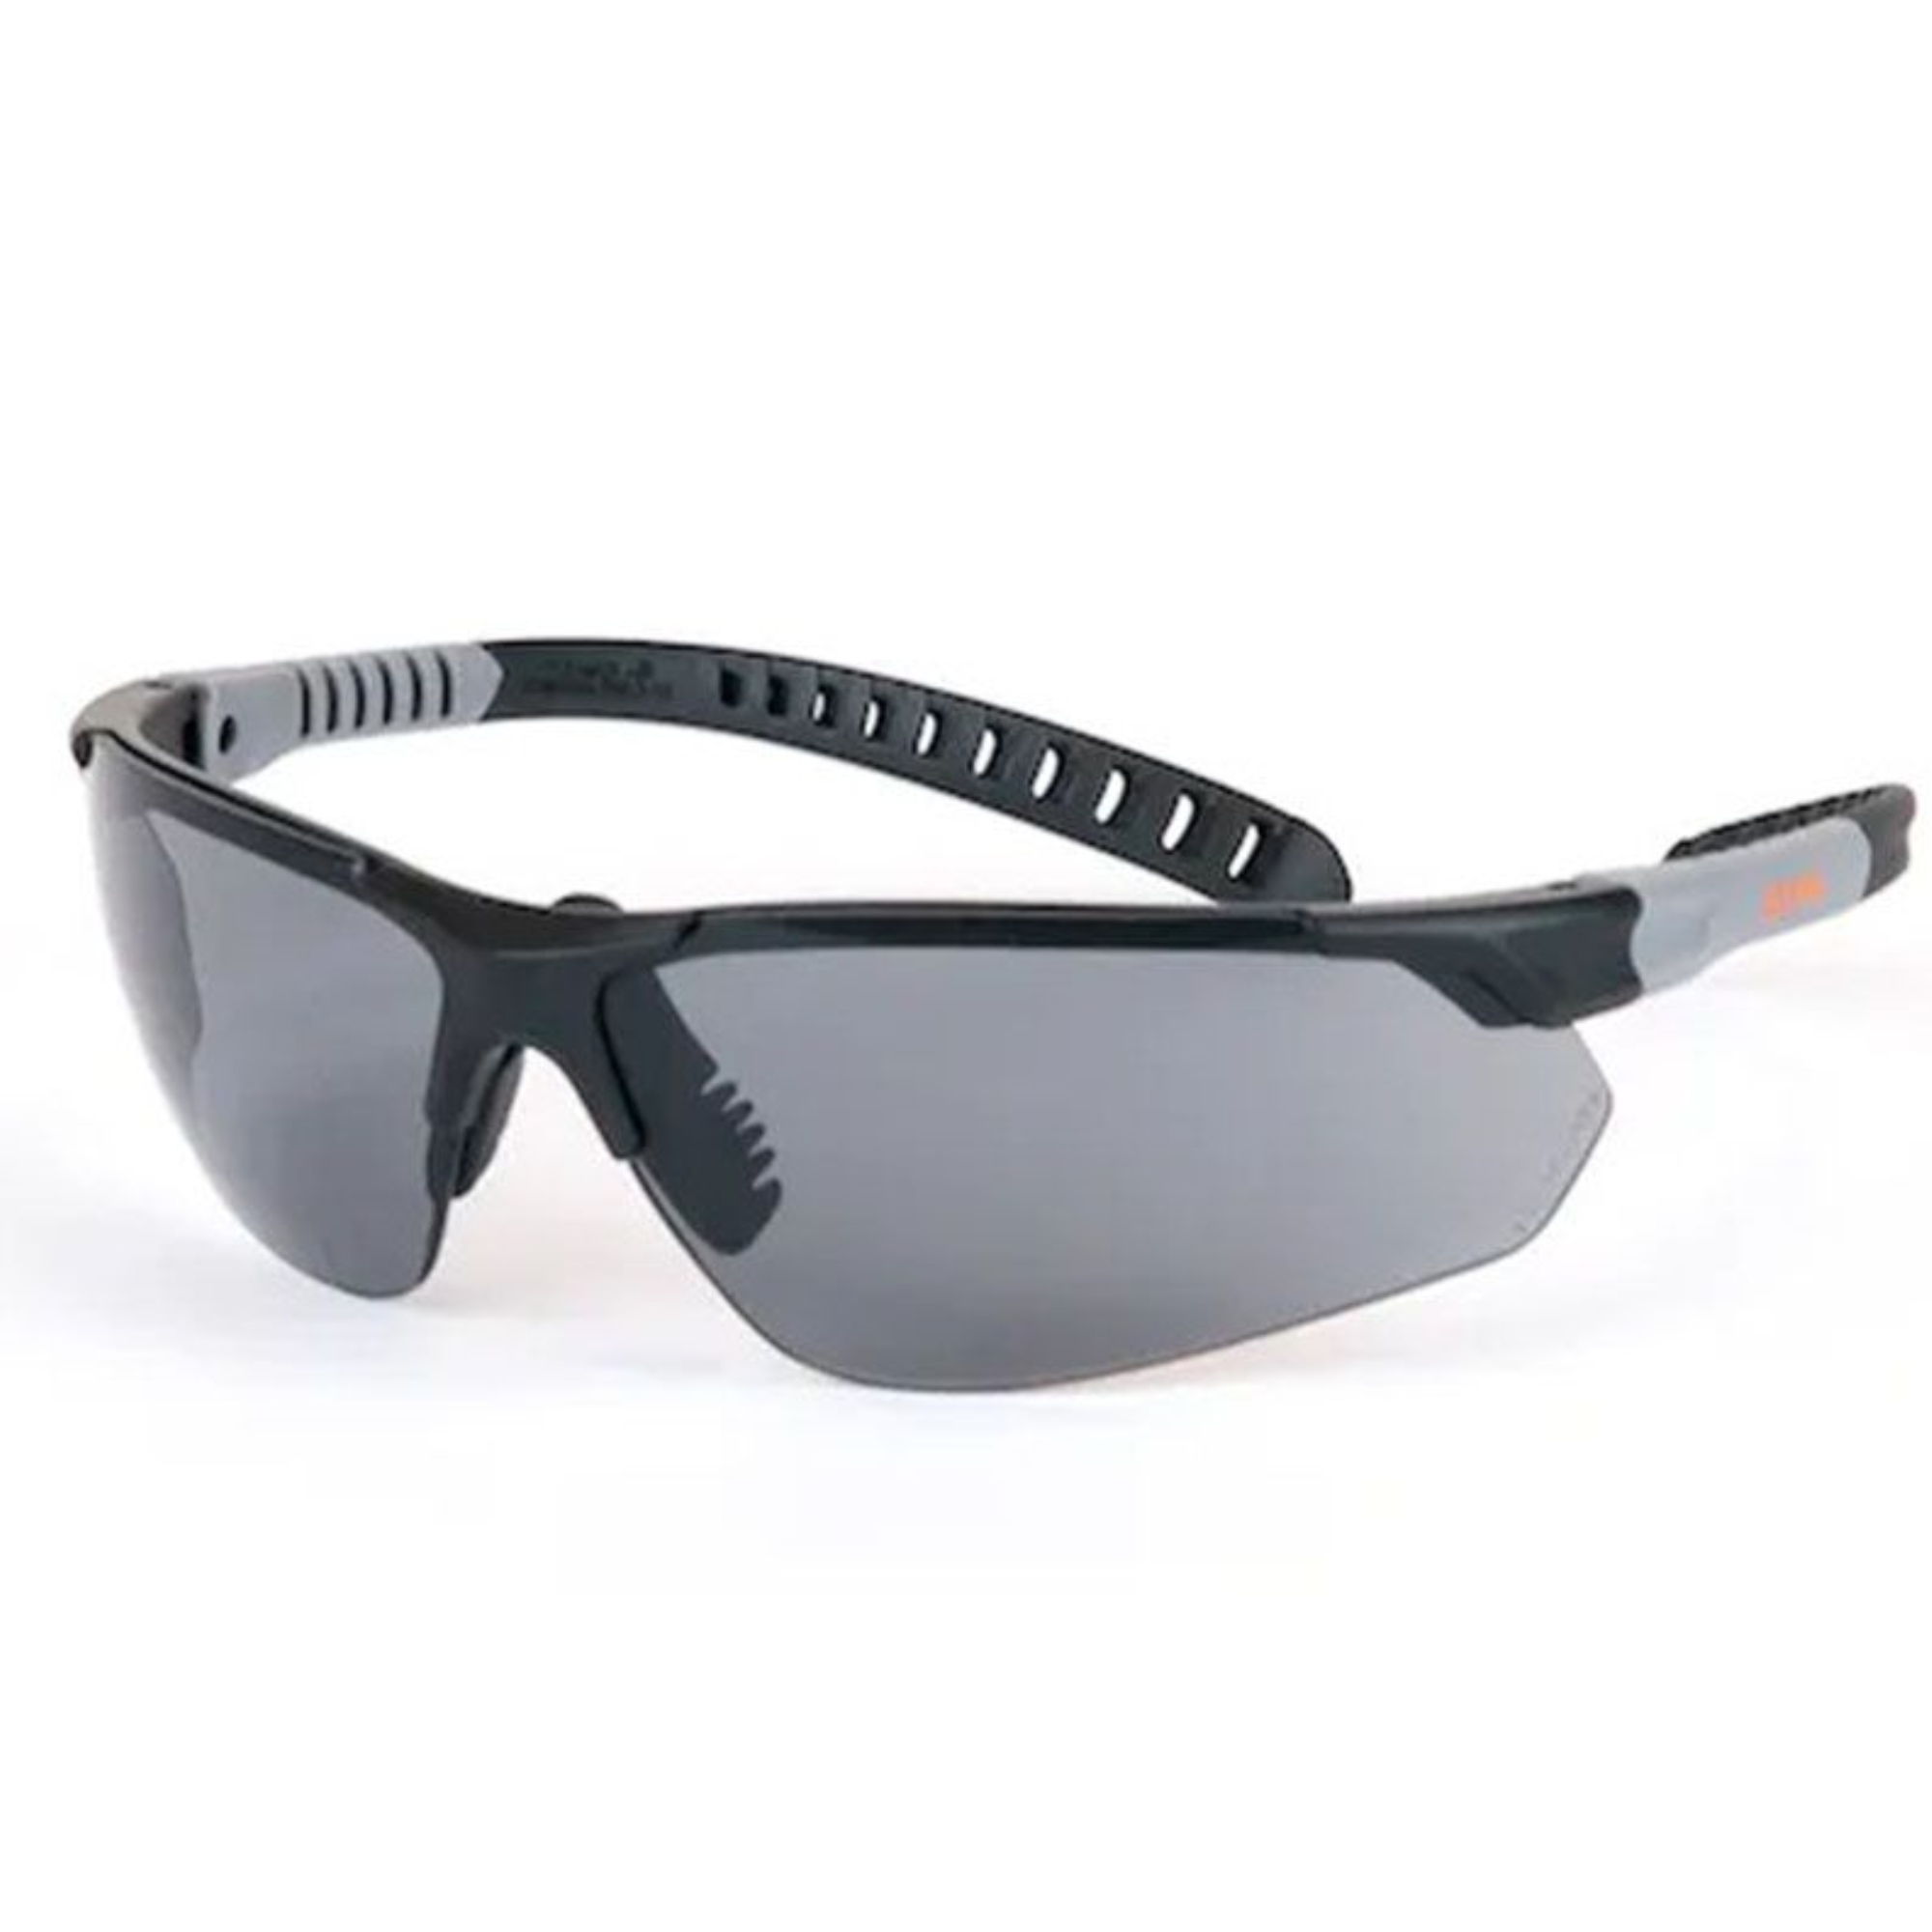 Stihl Adjustable Protective Glasses (Smoke Lens) - Black/Gray Frame at Rigging Warehouse